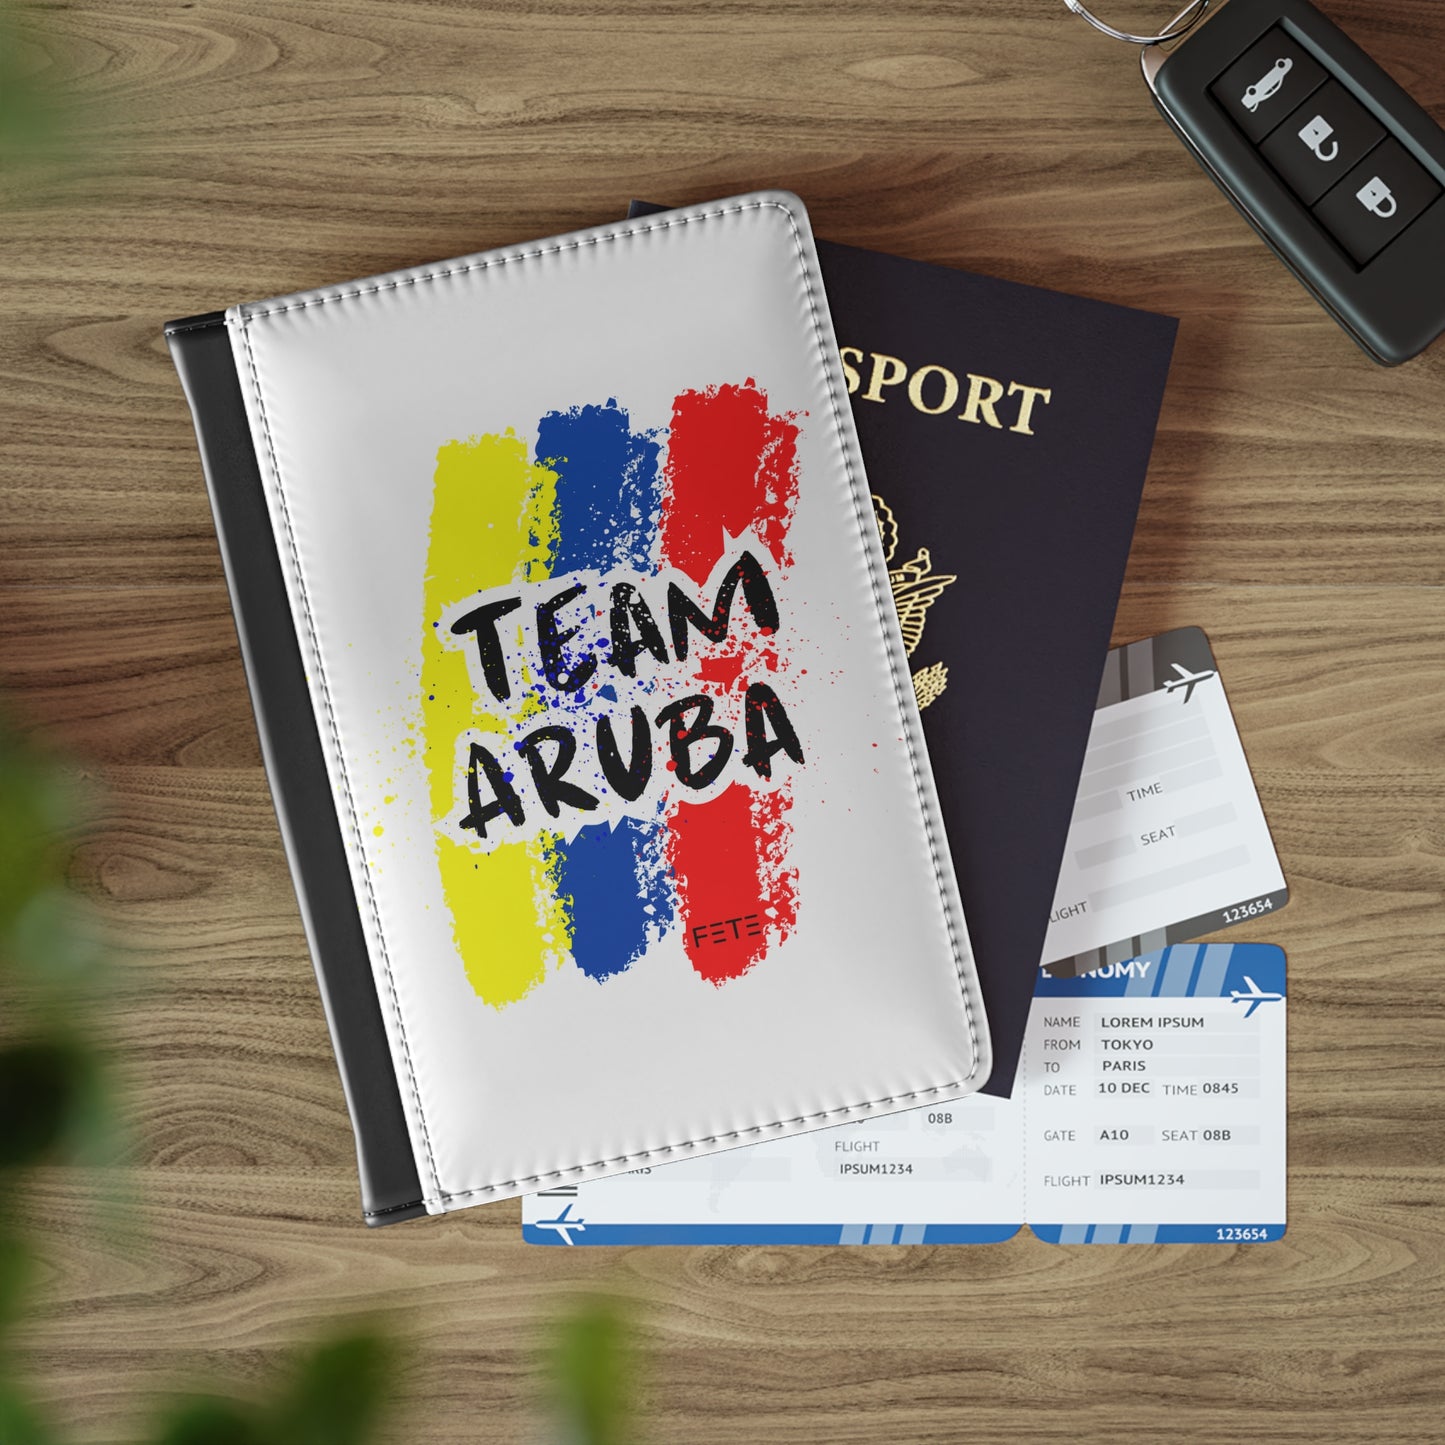 Tram Aruba Passport Cover